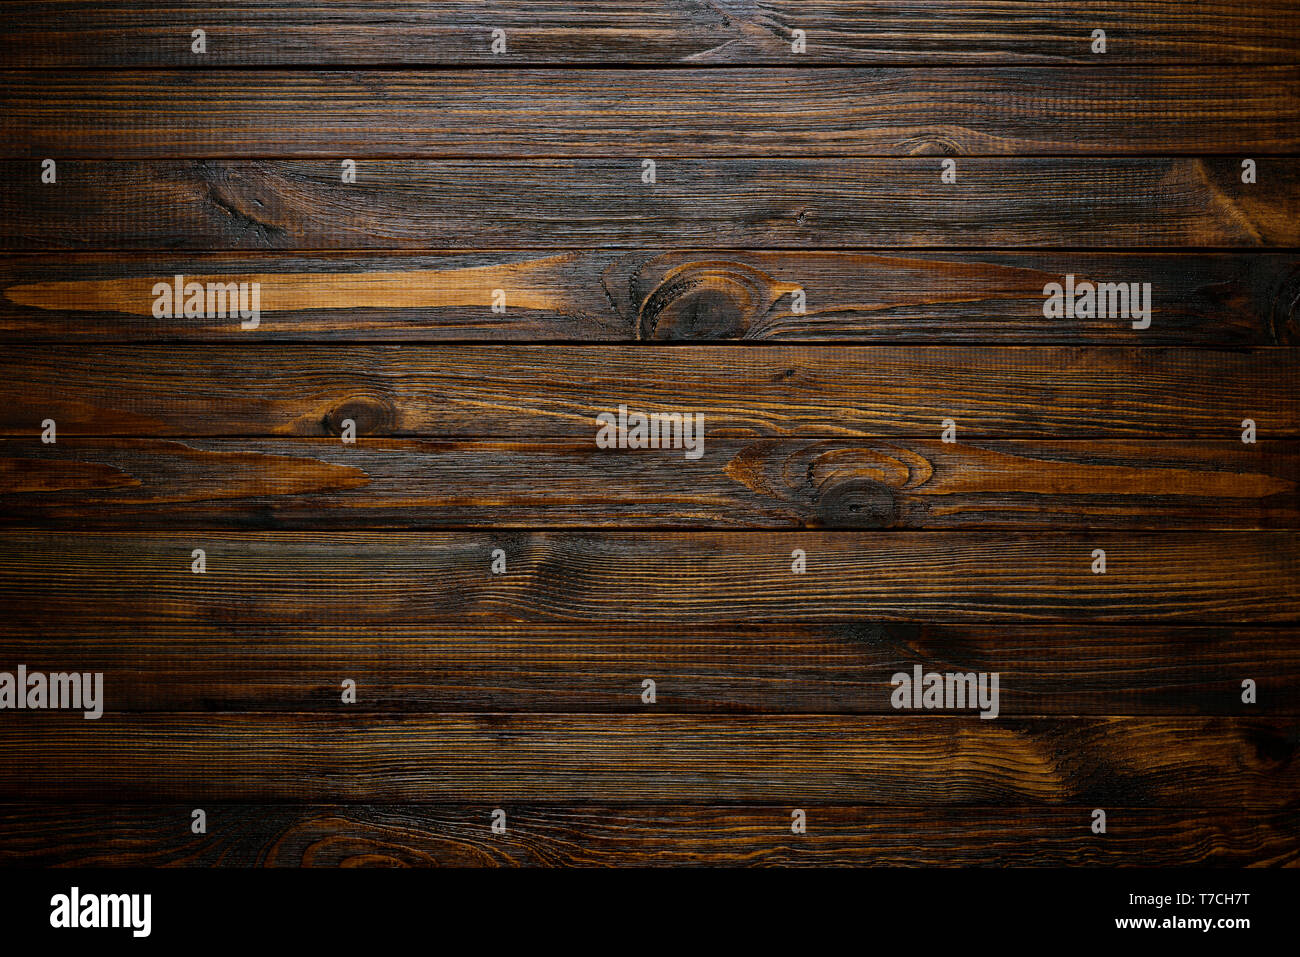 Textura de madera natural. Fondo de madera. Oscuro tablones rústica mesa plana vista laical. Foto de stock